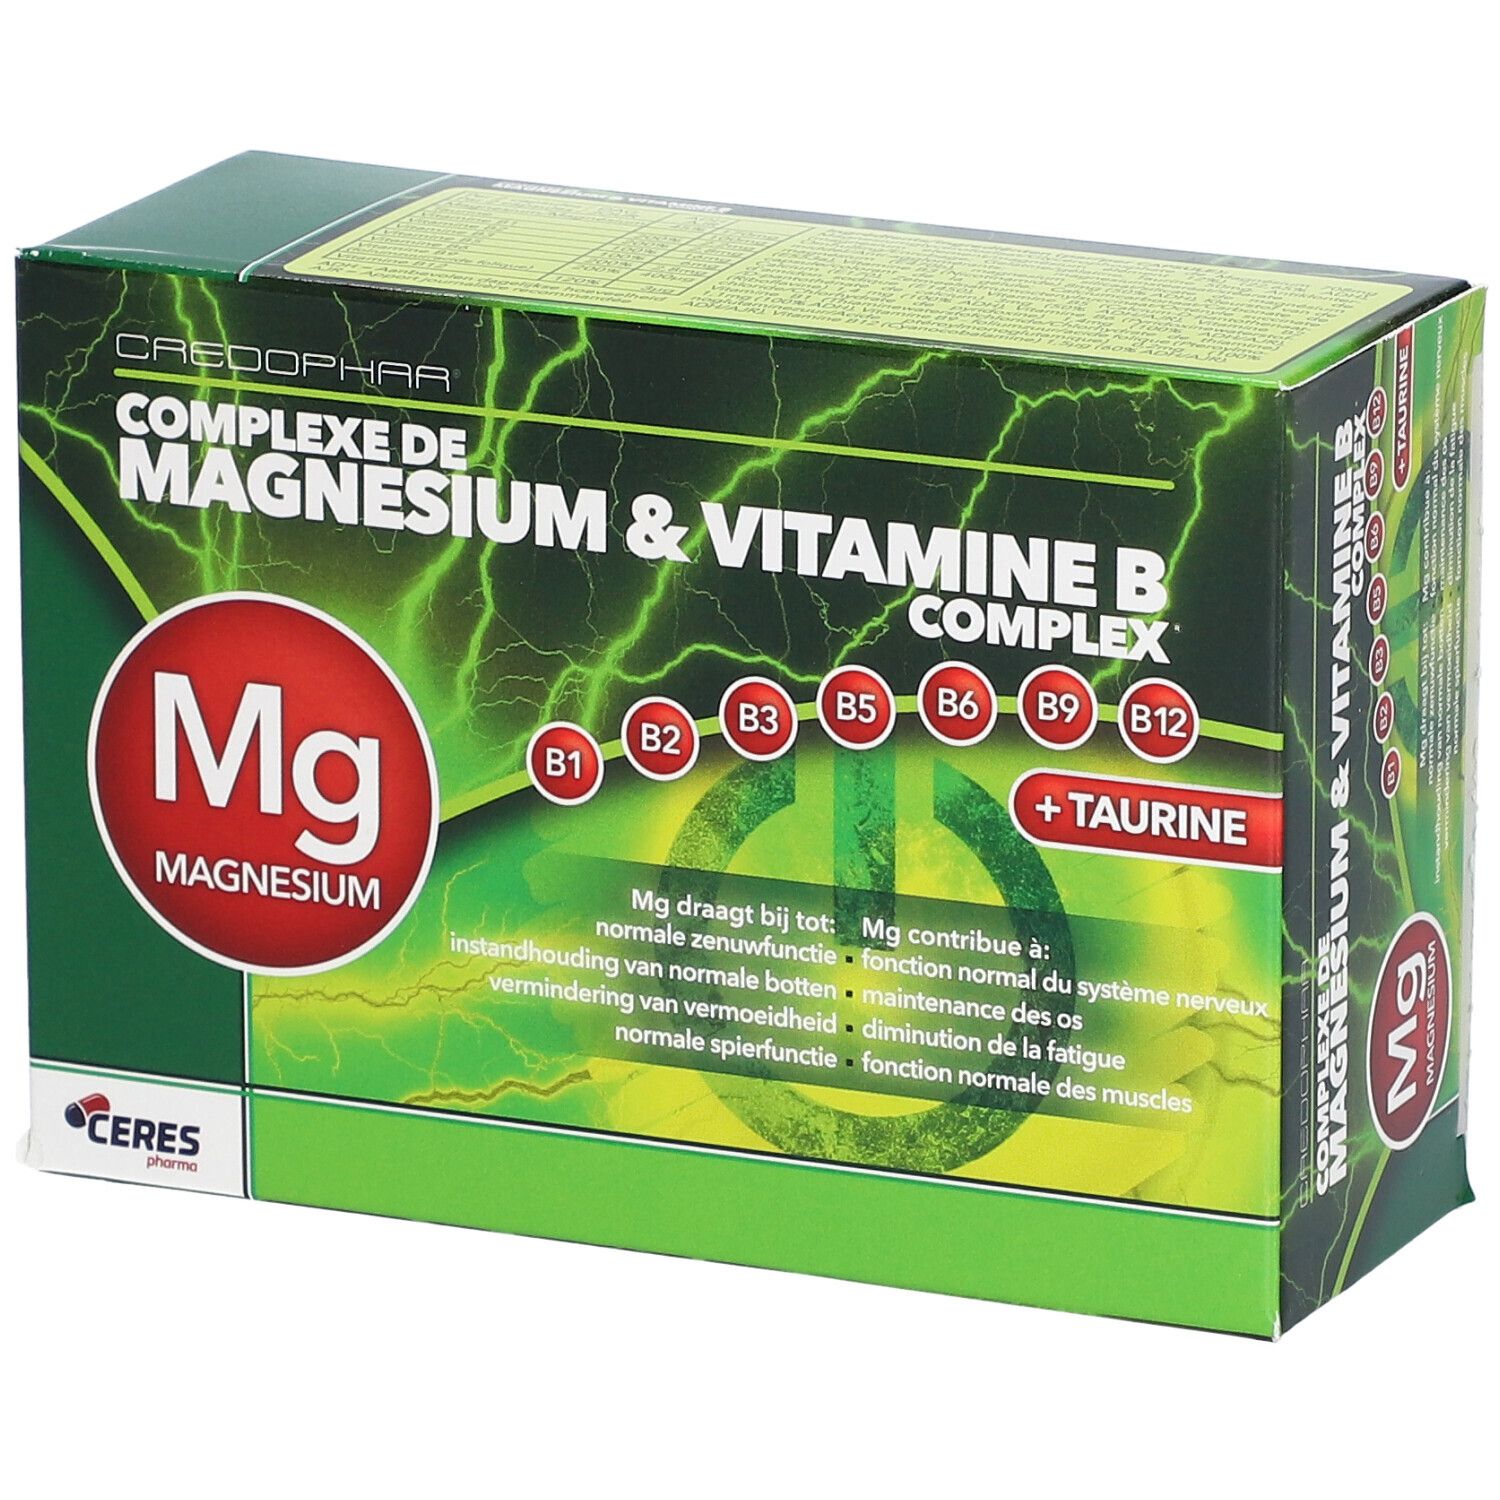 Credophar® Complexe de Magnesium & Vitamine B